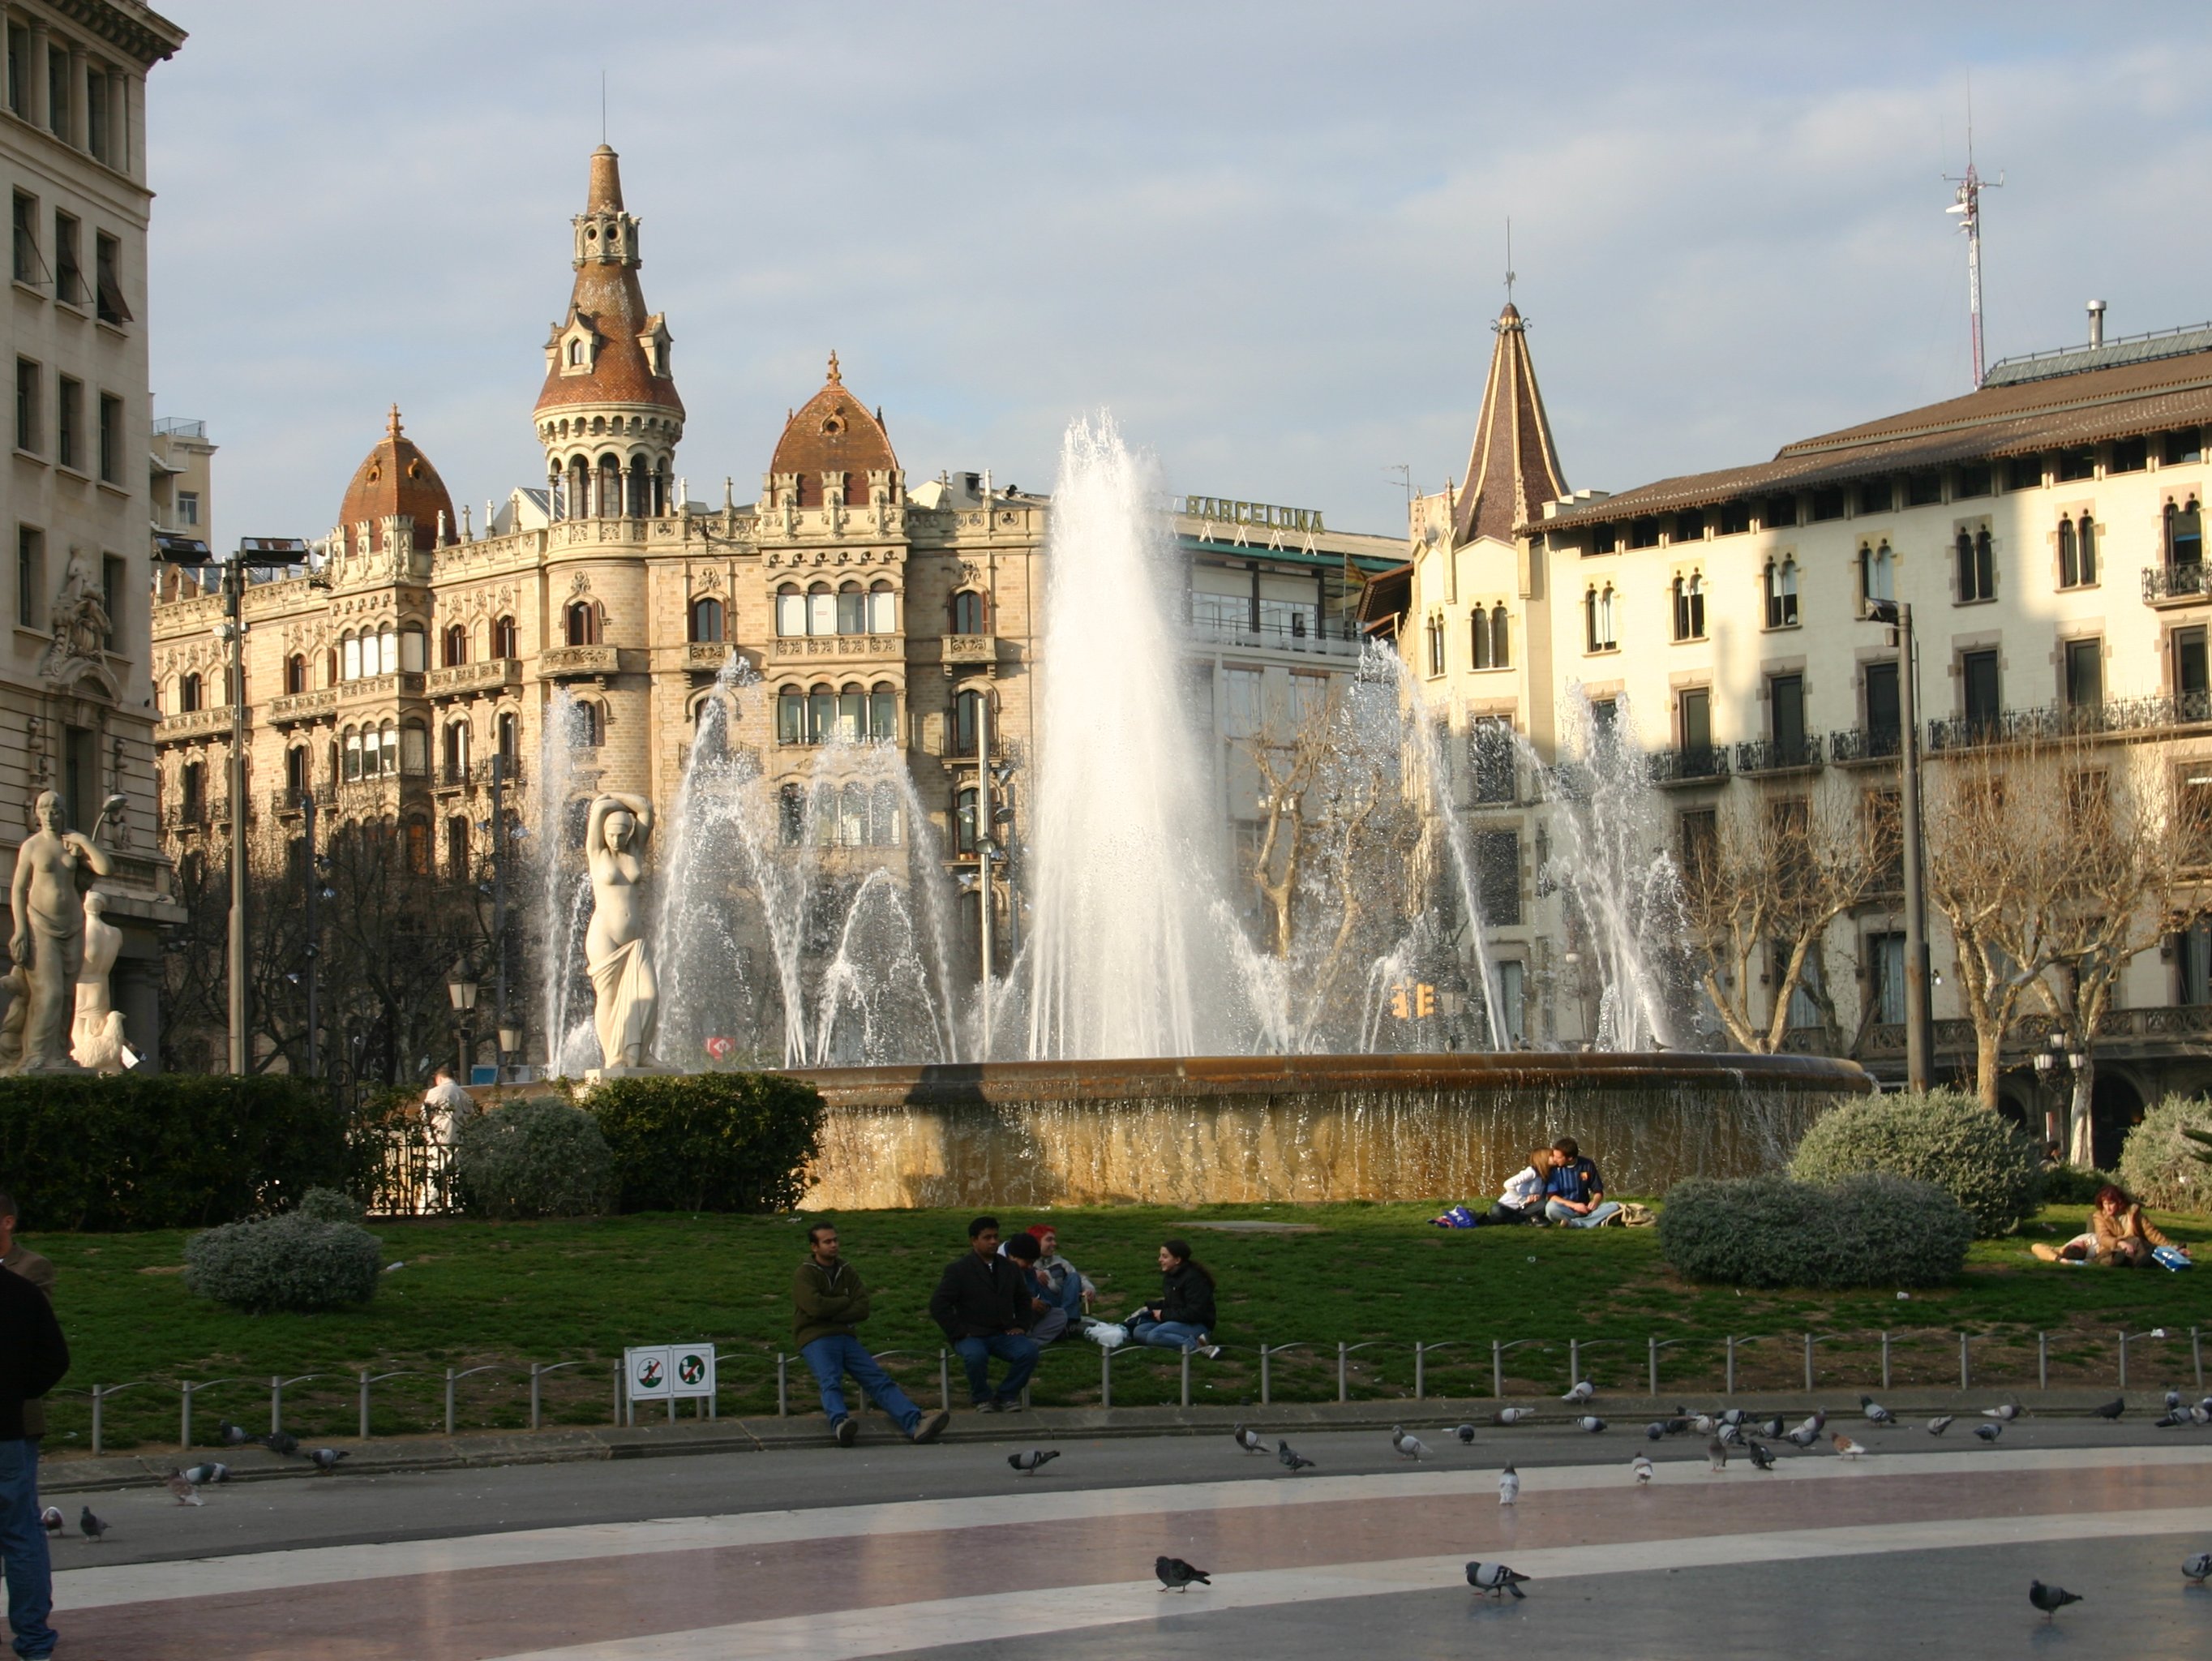 Barcelona Plaza Catalunya